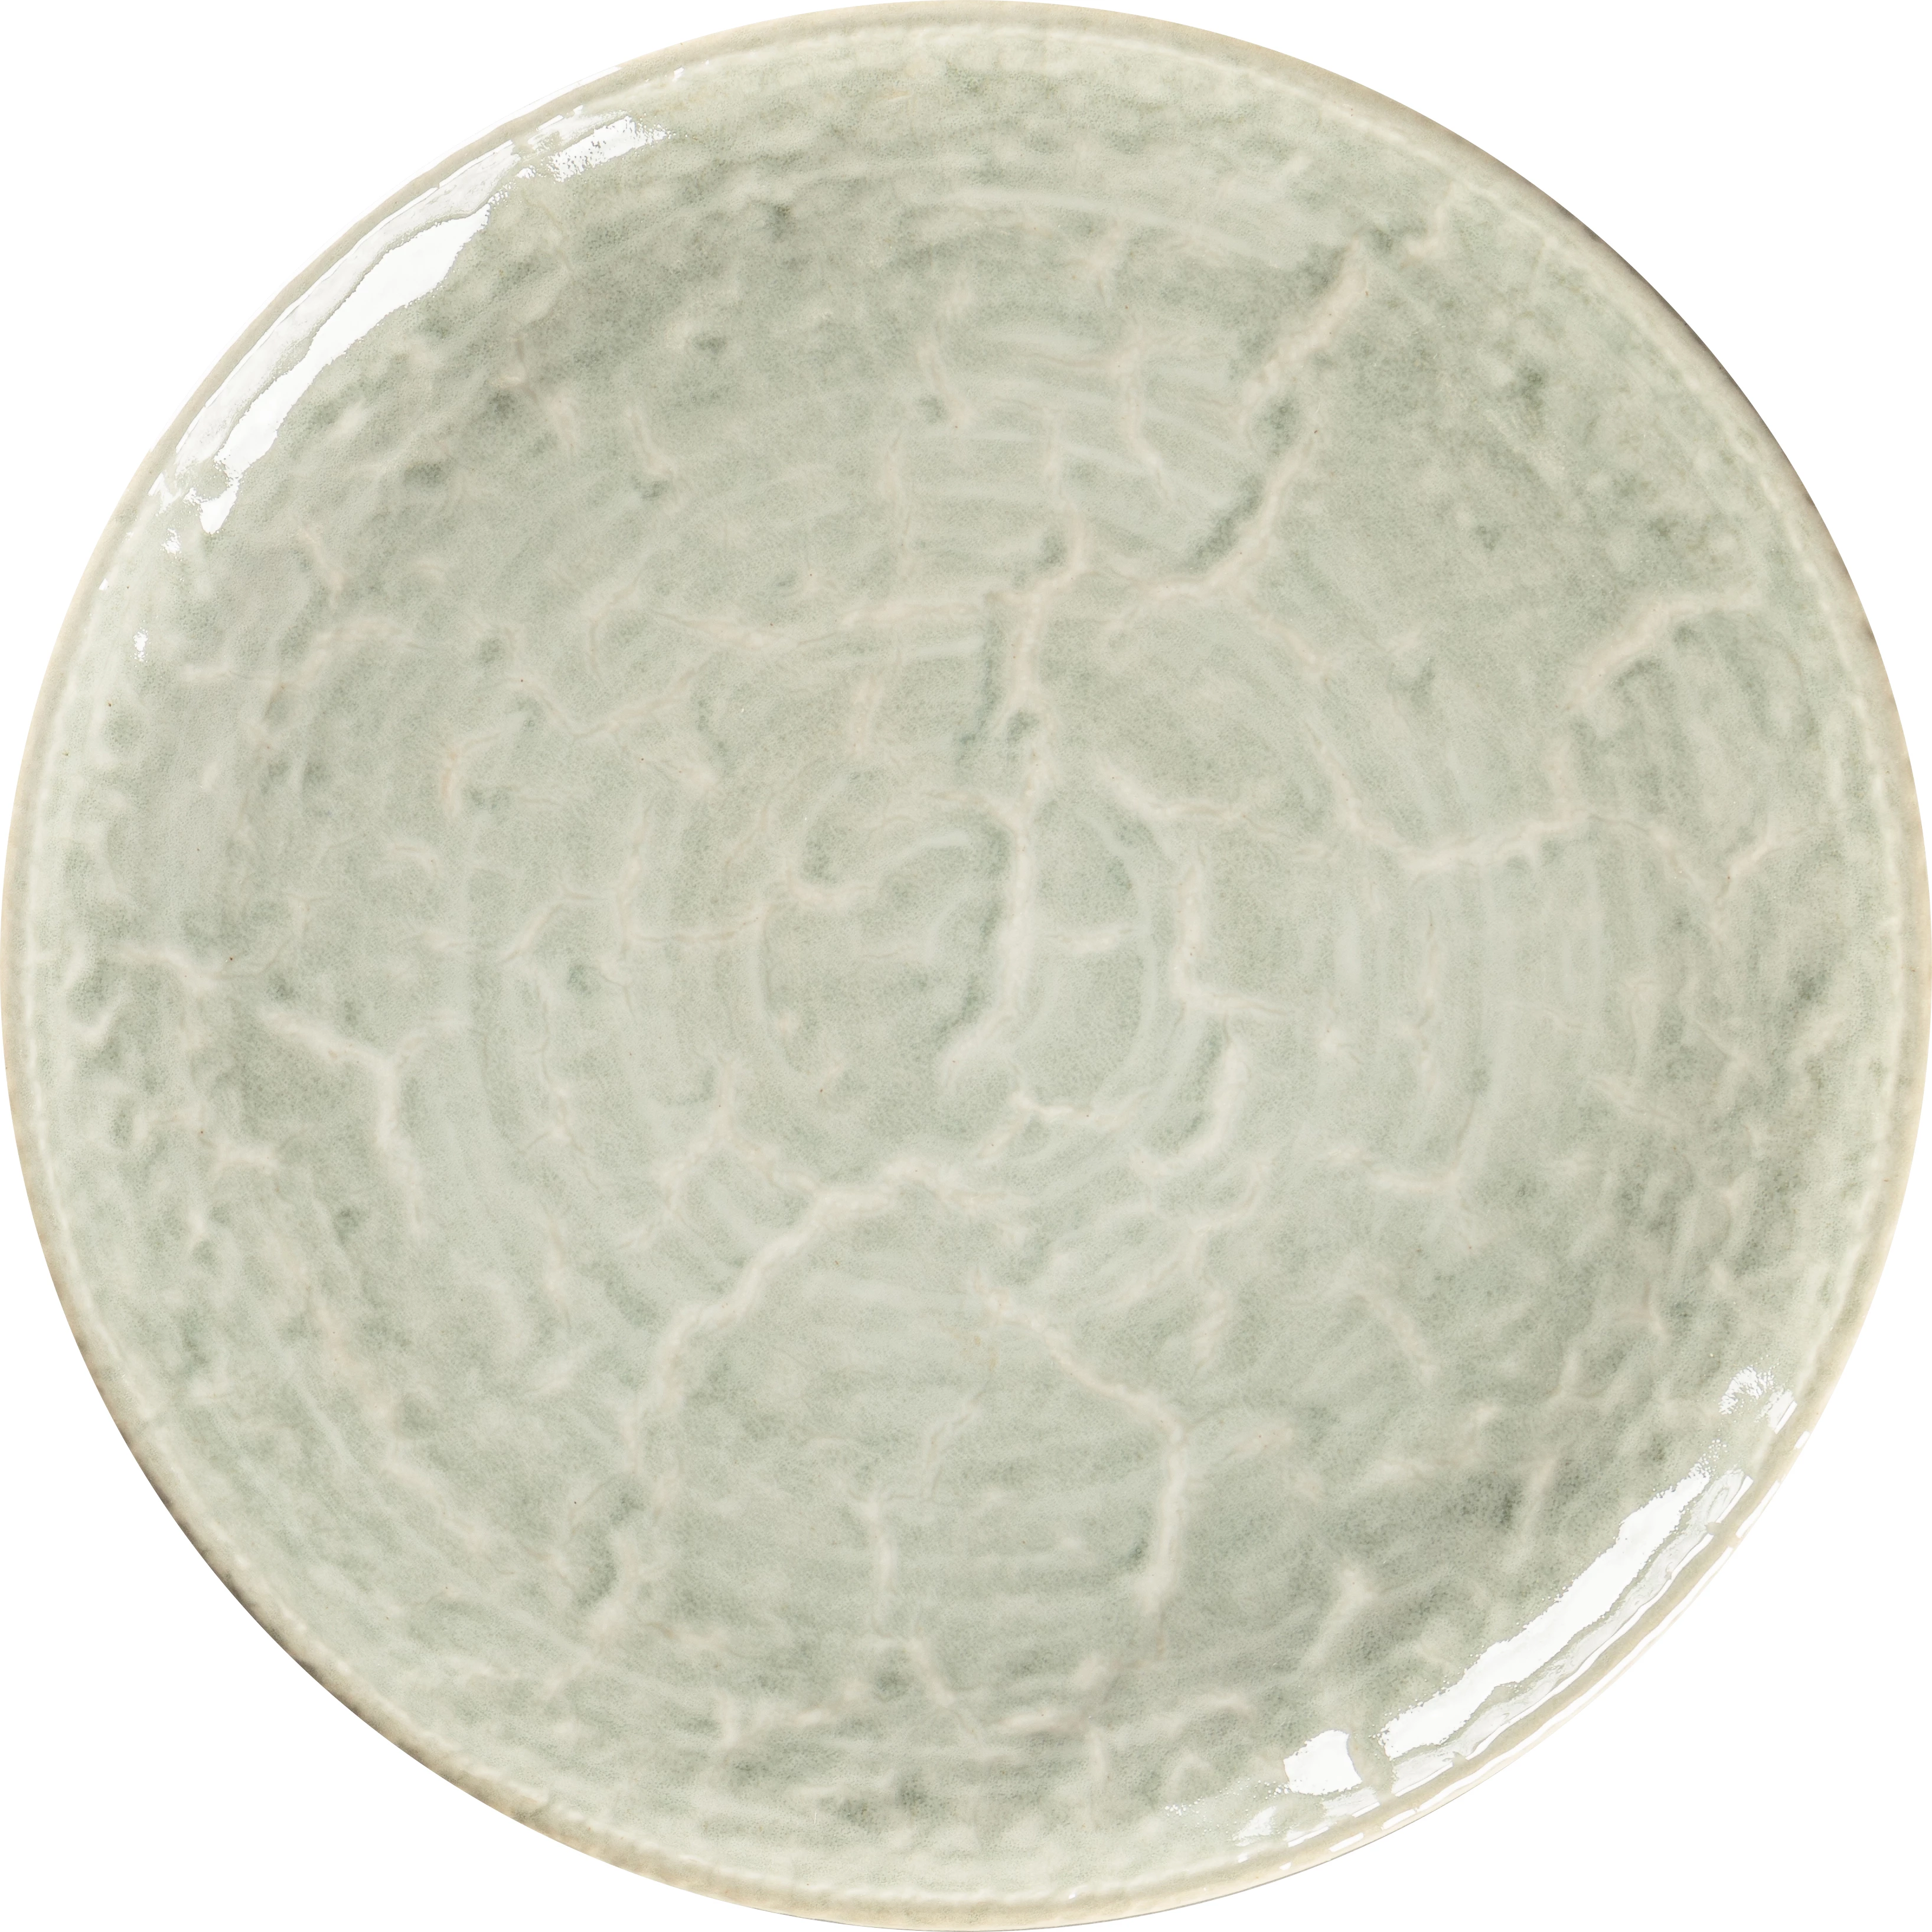 RAK Krush tallerken uden fane, flad, grå, ø27,9 cm